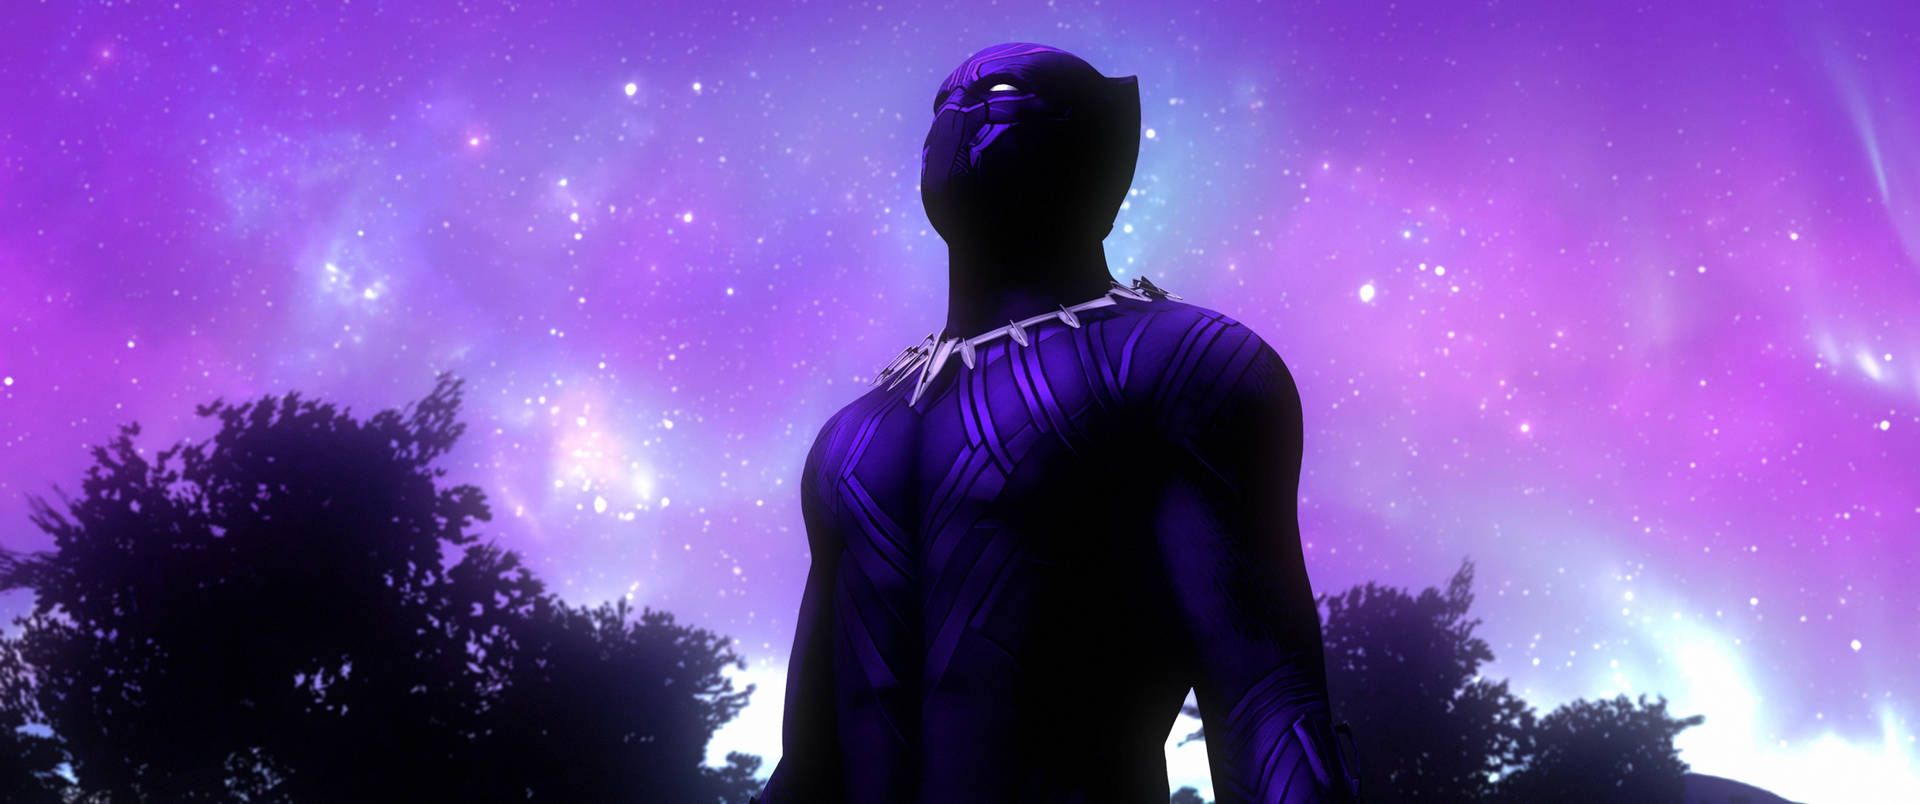  Black Panther Hintergrundbild 1920x804. Download Black Panther Superhero Aesthetic Purple Sky Wallpaper